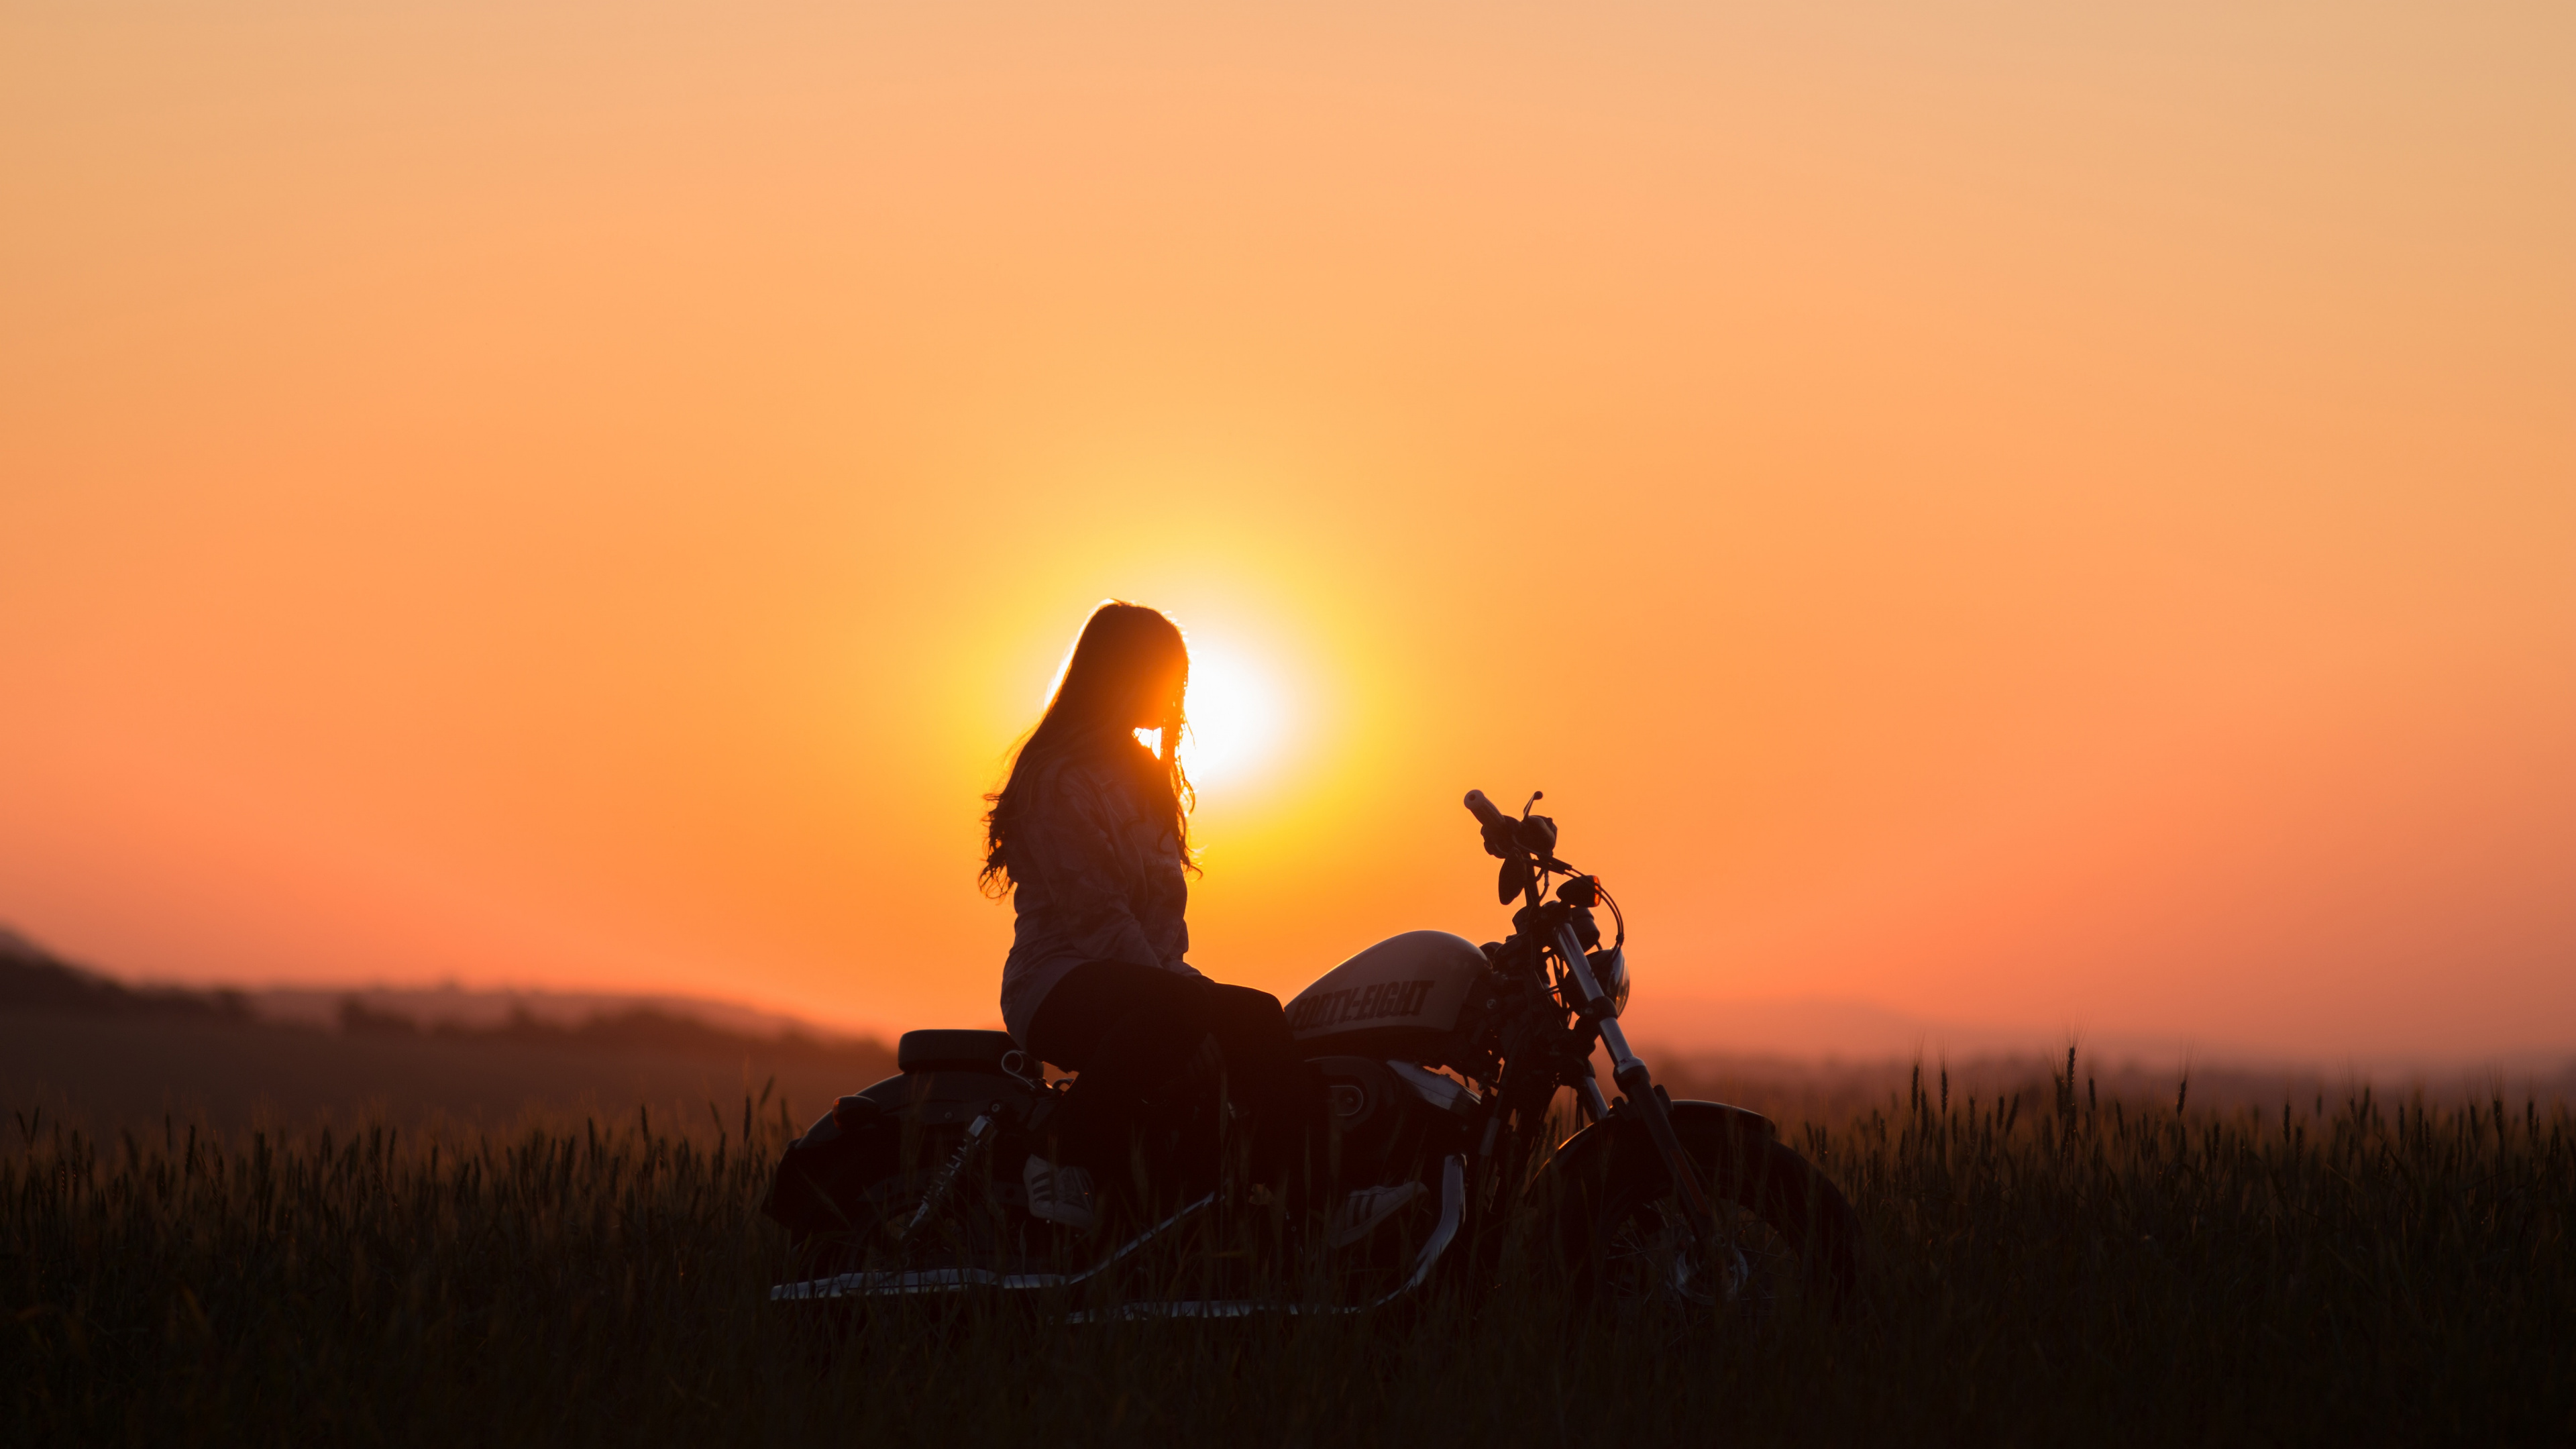 Обои мотоцикл, восход солнца, закат, солнце, утро в разрешении 3840x2160